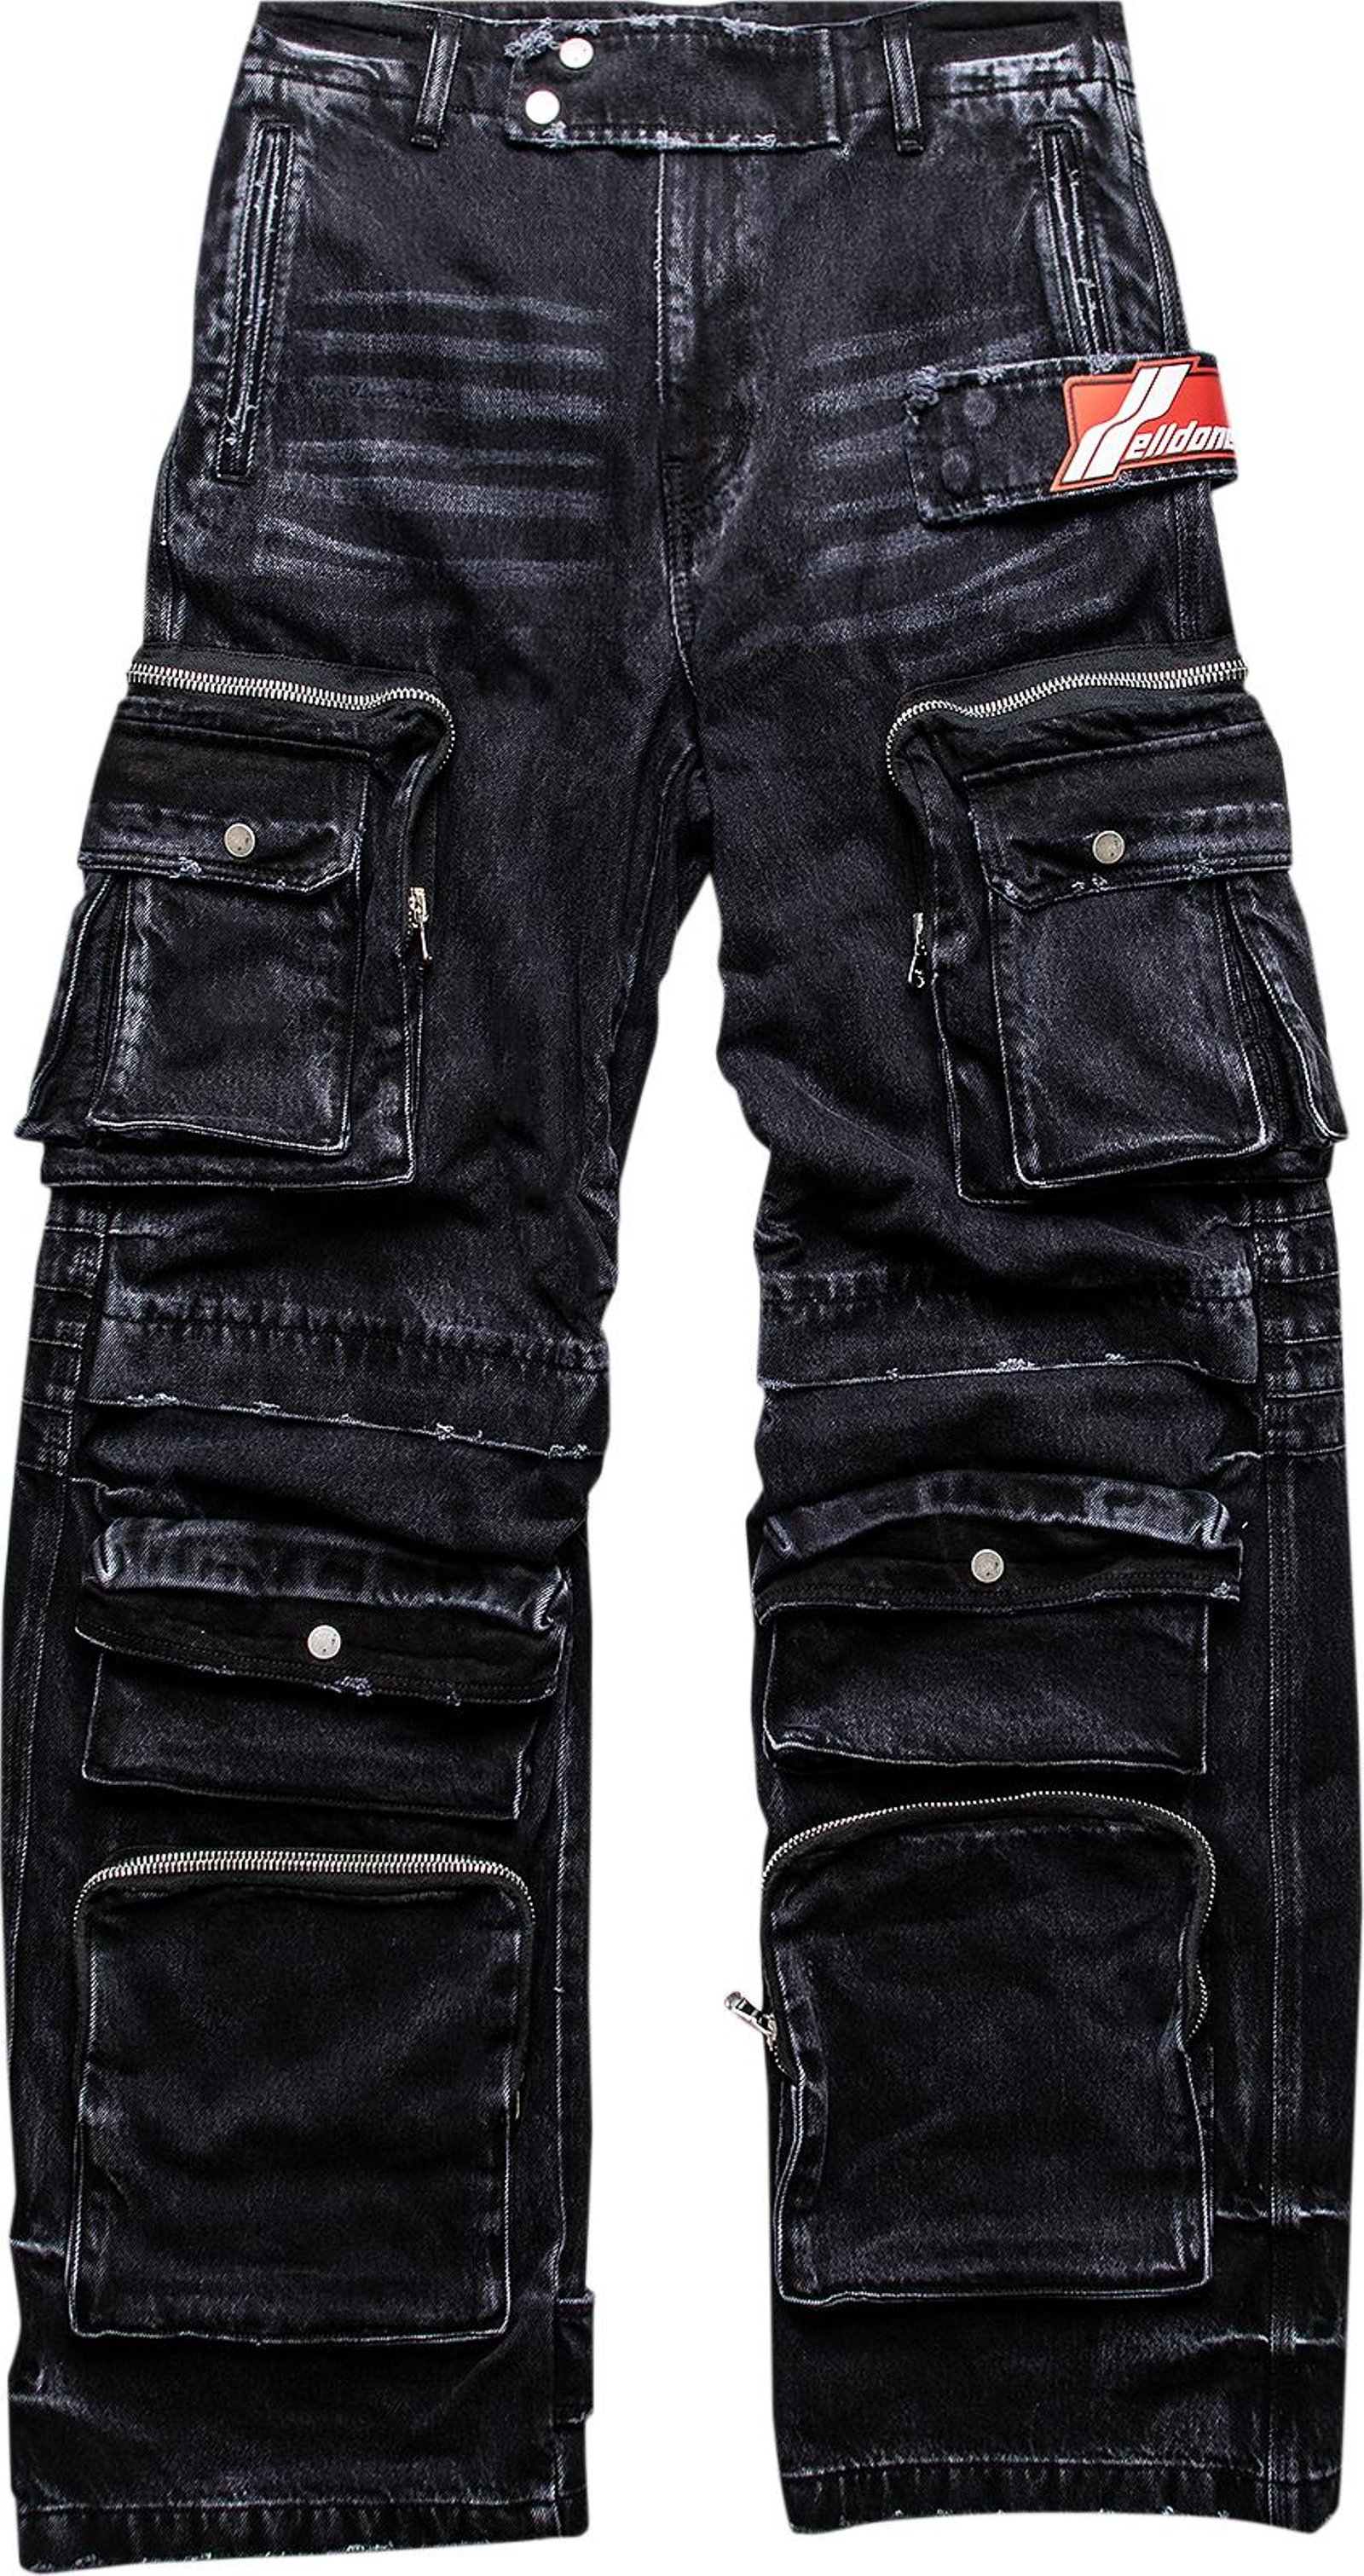 Buy We11done Multiwashed Cargo Pants 'Black' - WD DP1 22 367 M WB | GOAT